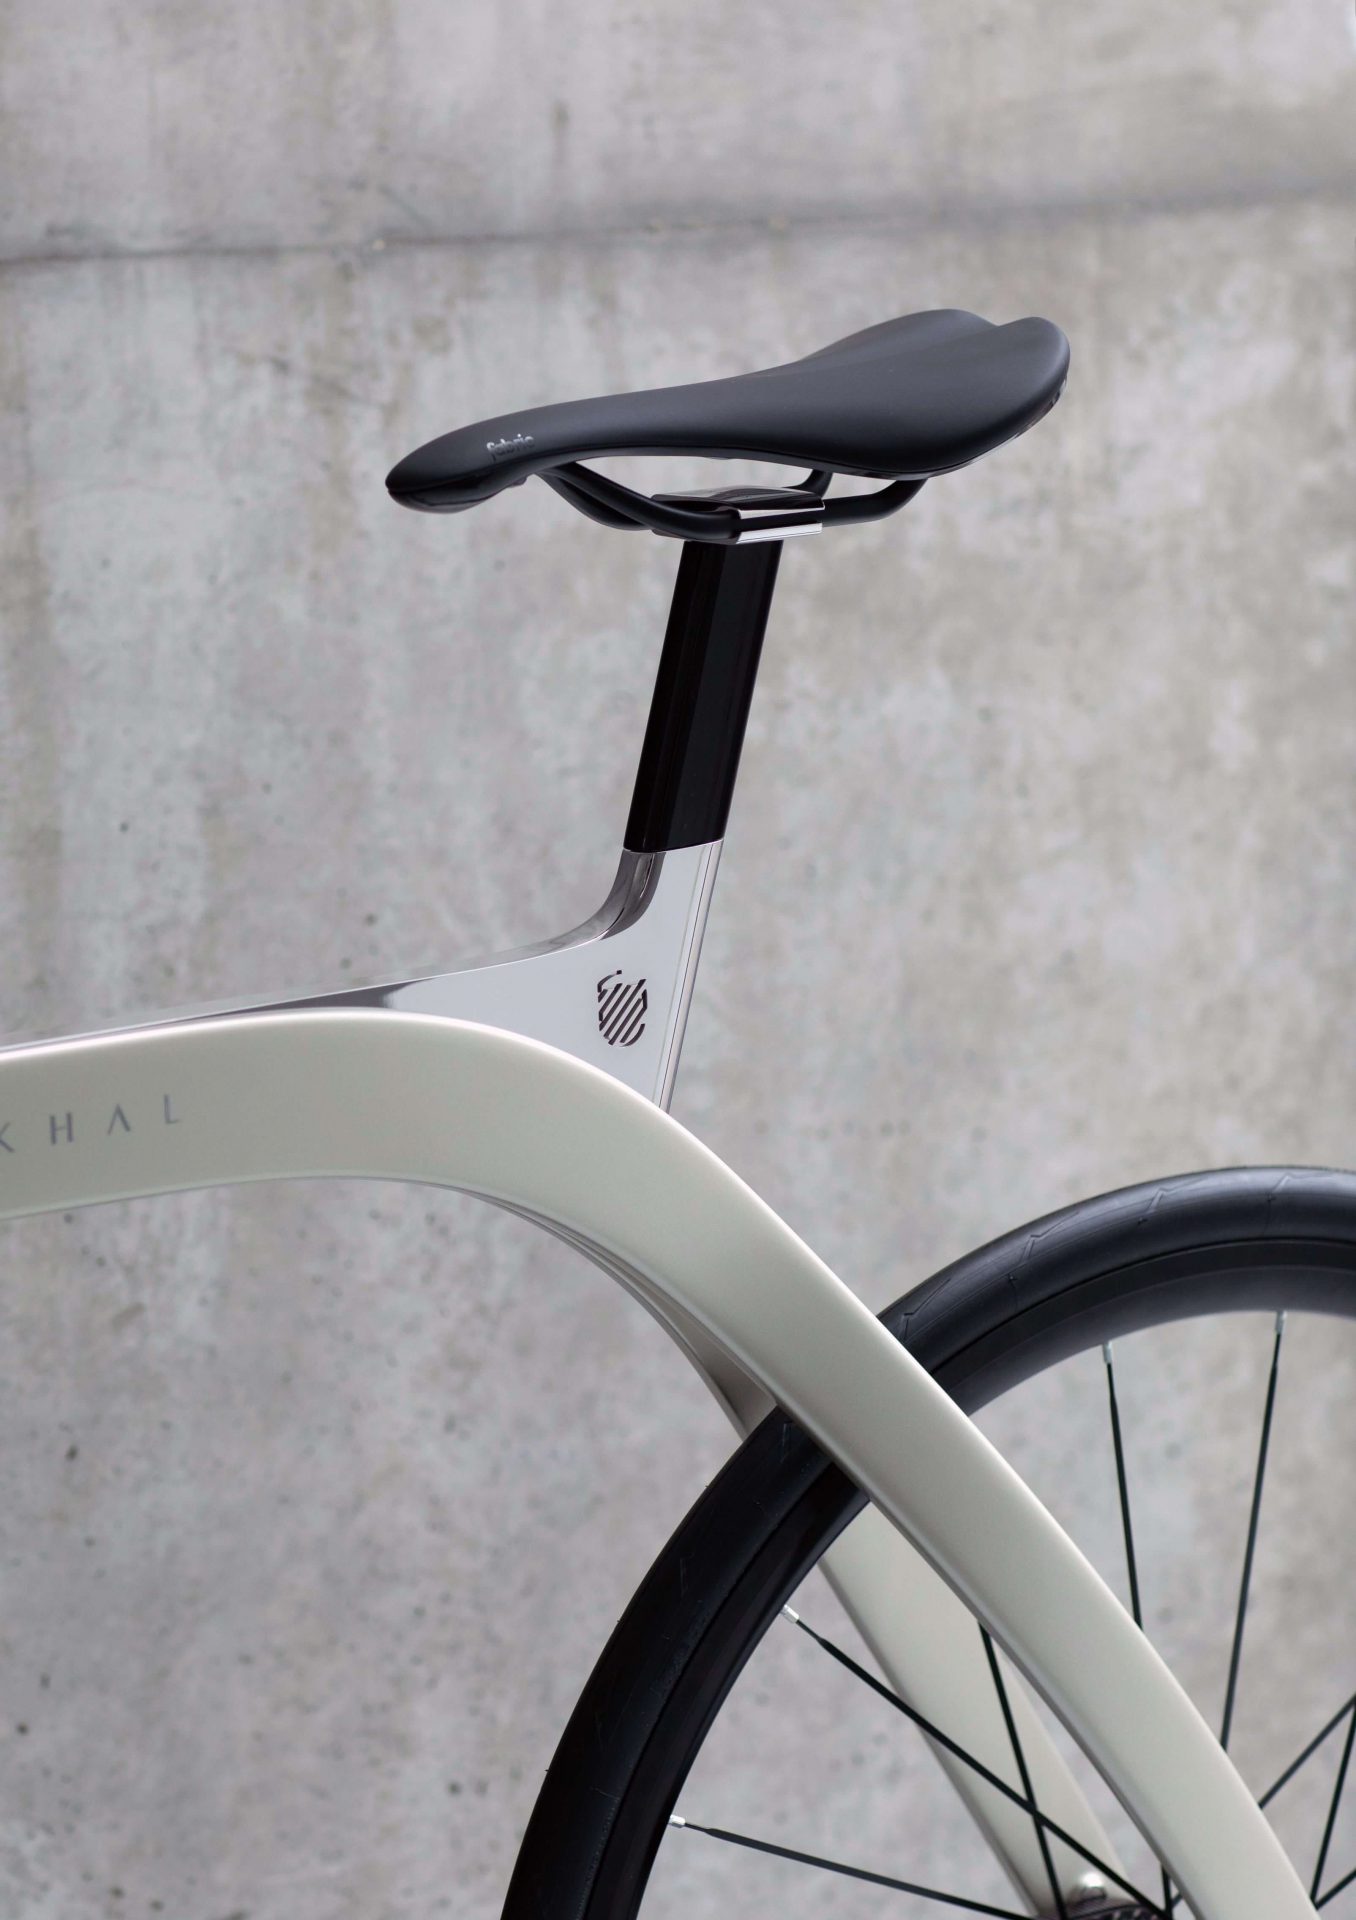 Extans Design - Akhal bicycle closup